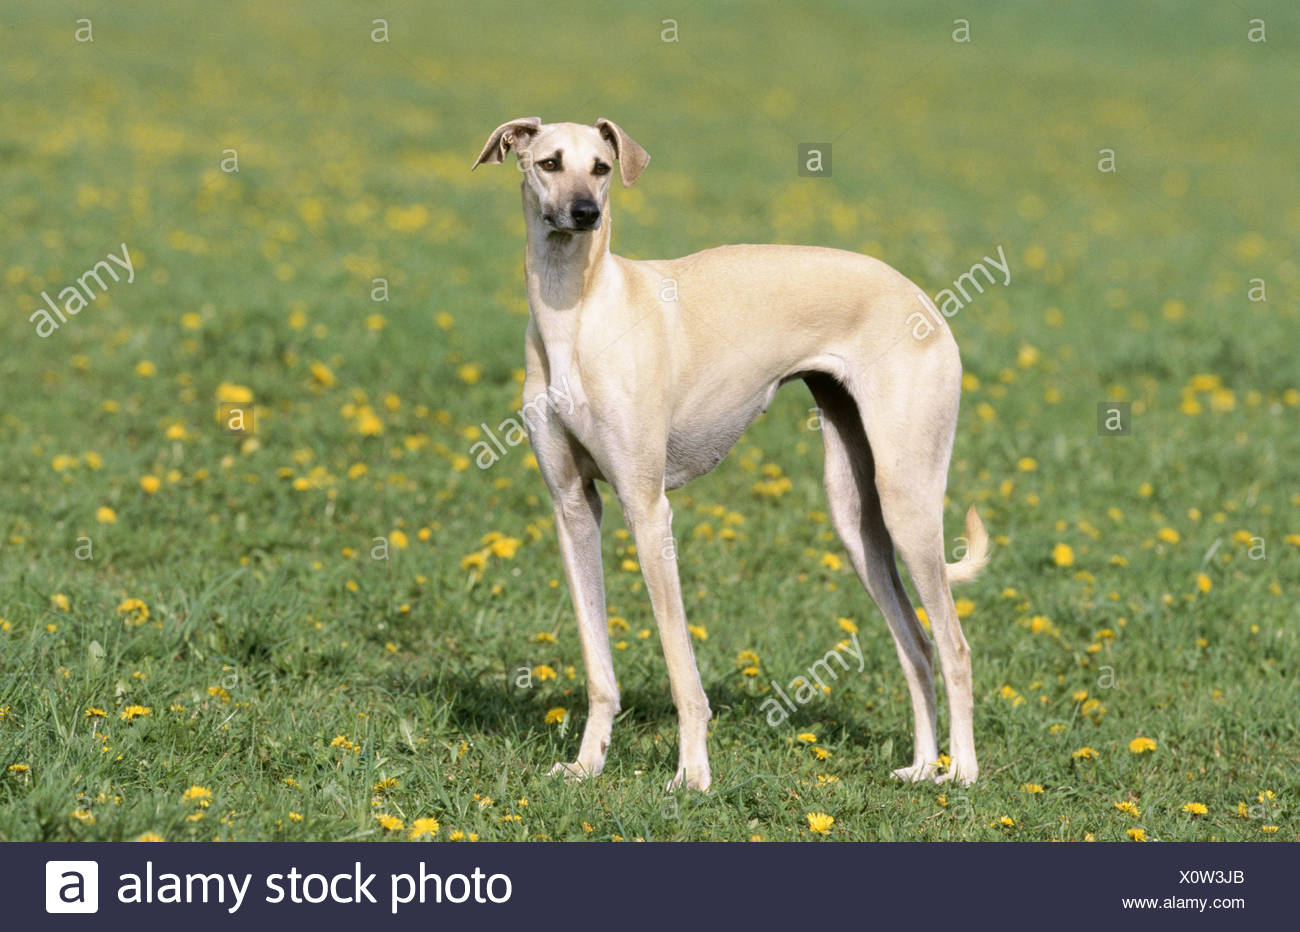 Arabian Greyhound (Sloughi Stock Photo 